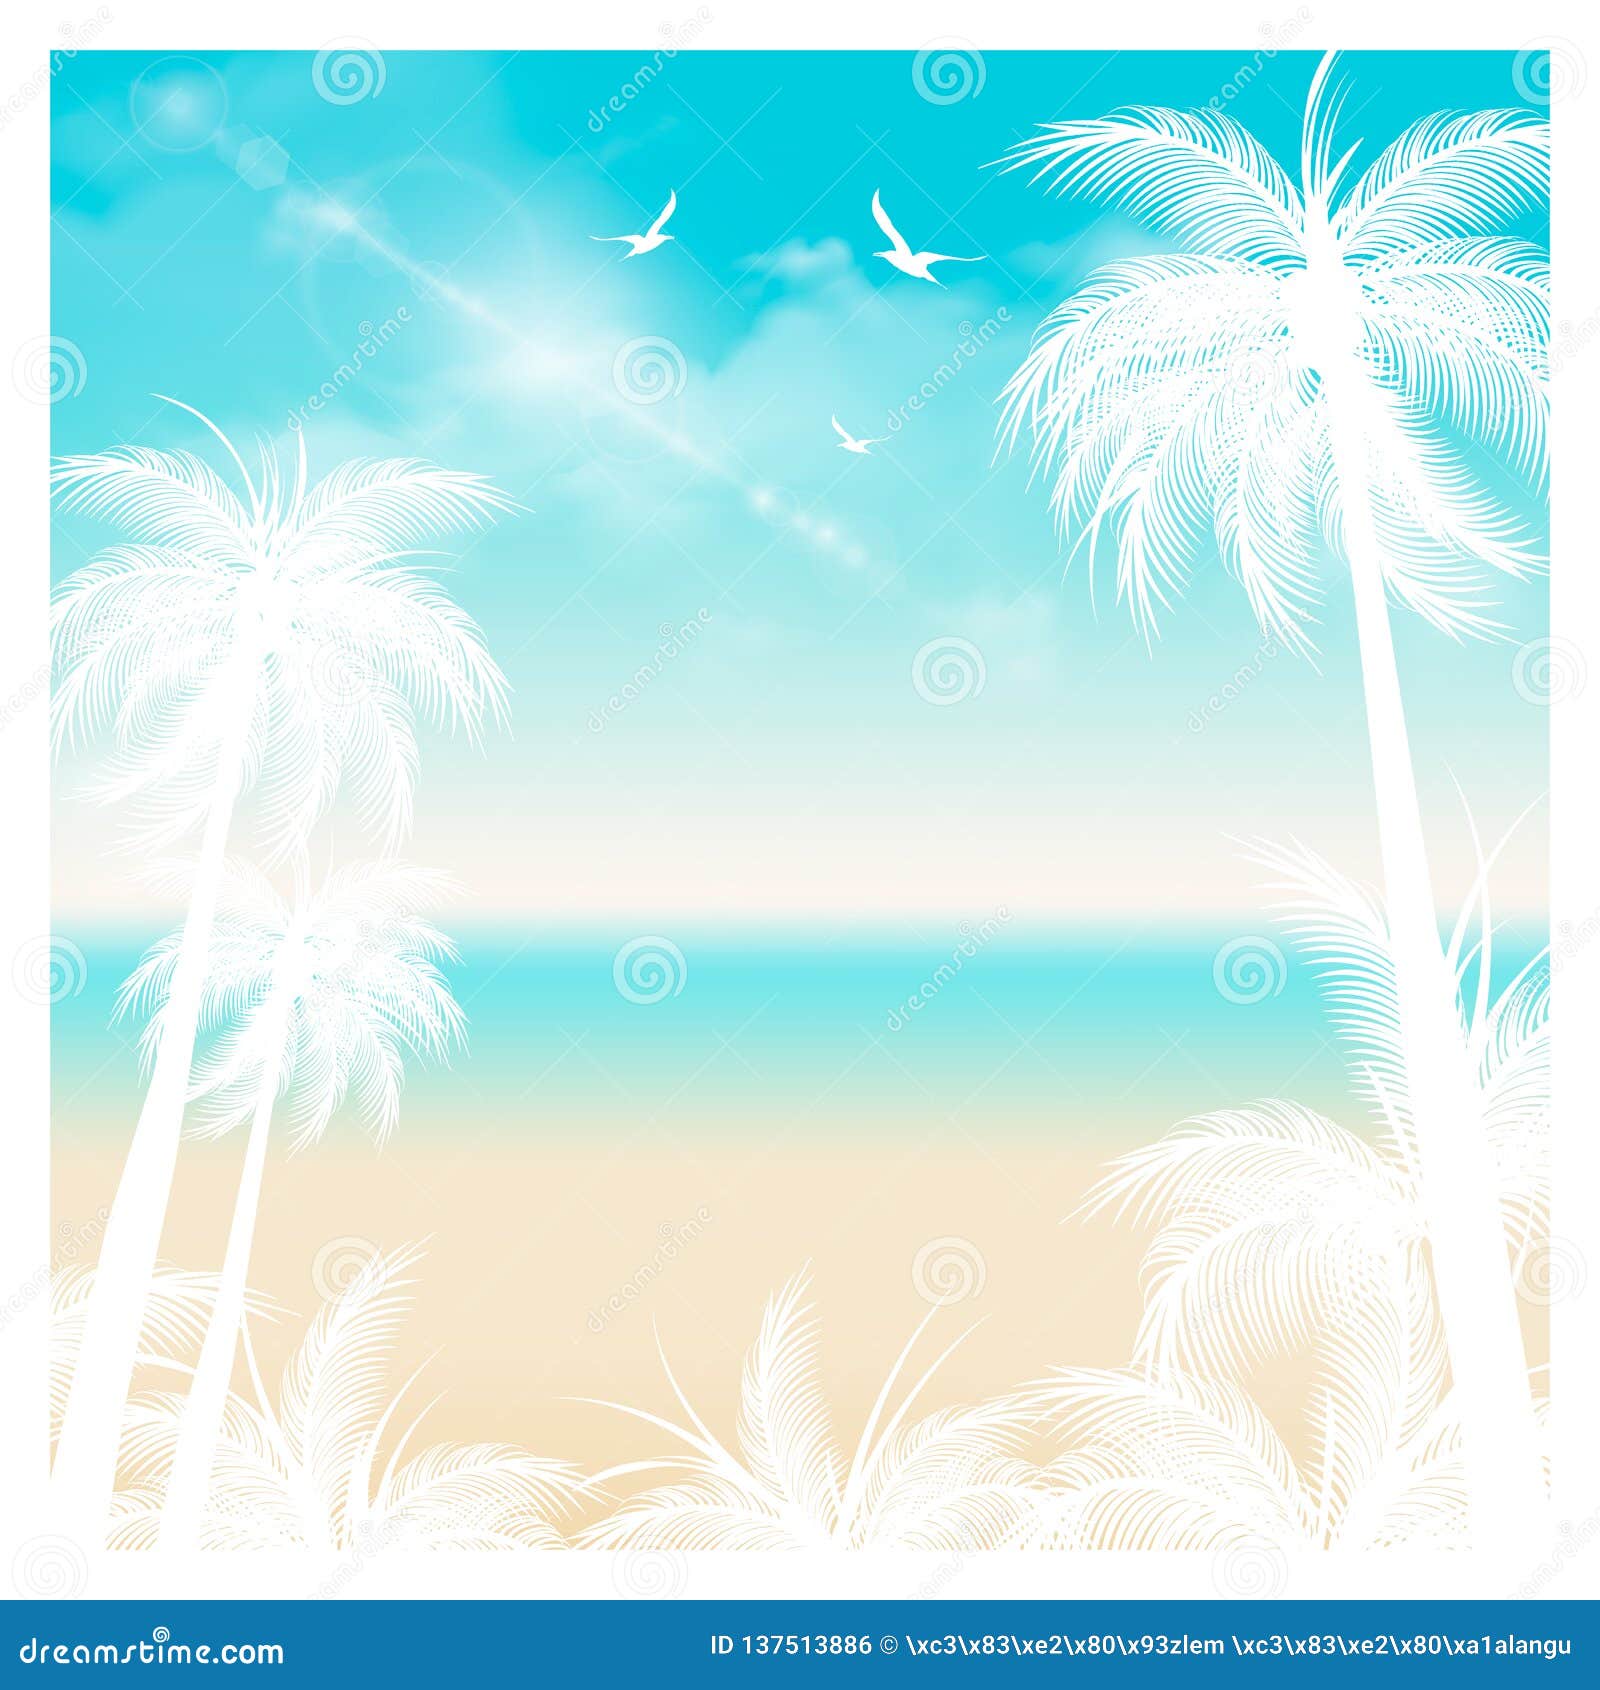 Summer Background, Summer Time, Summer Holiday Concept Vector Illustration  Stock Vector - Illustration of ocean, card: 137513886